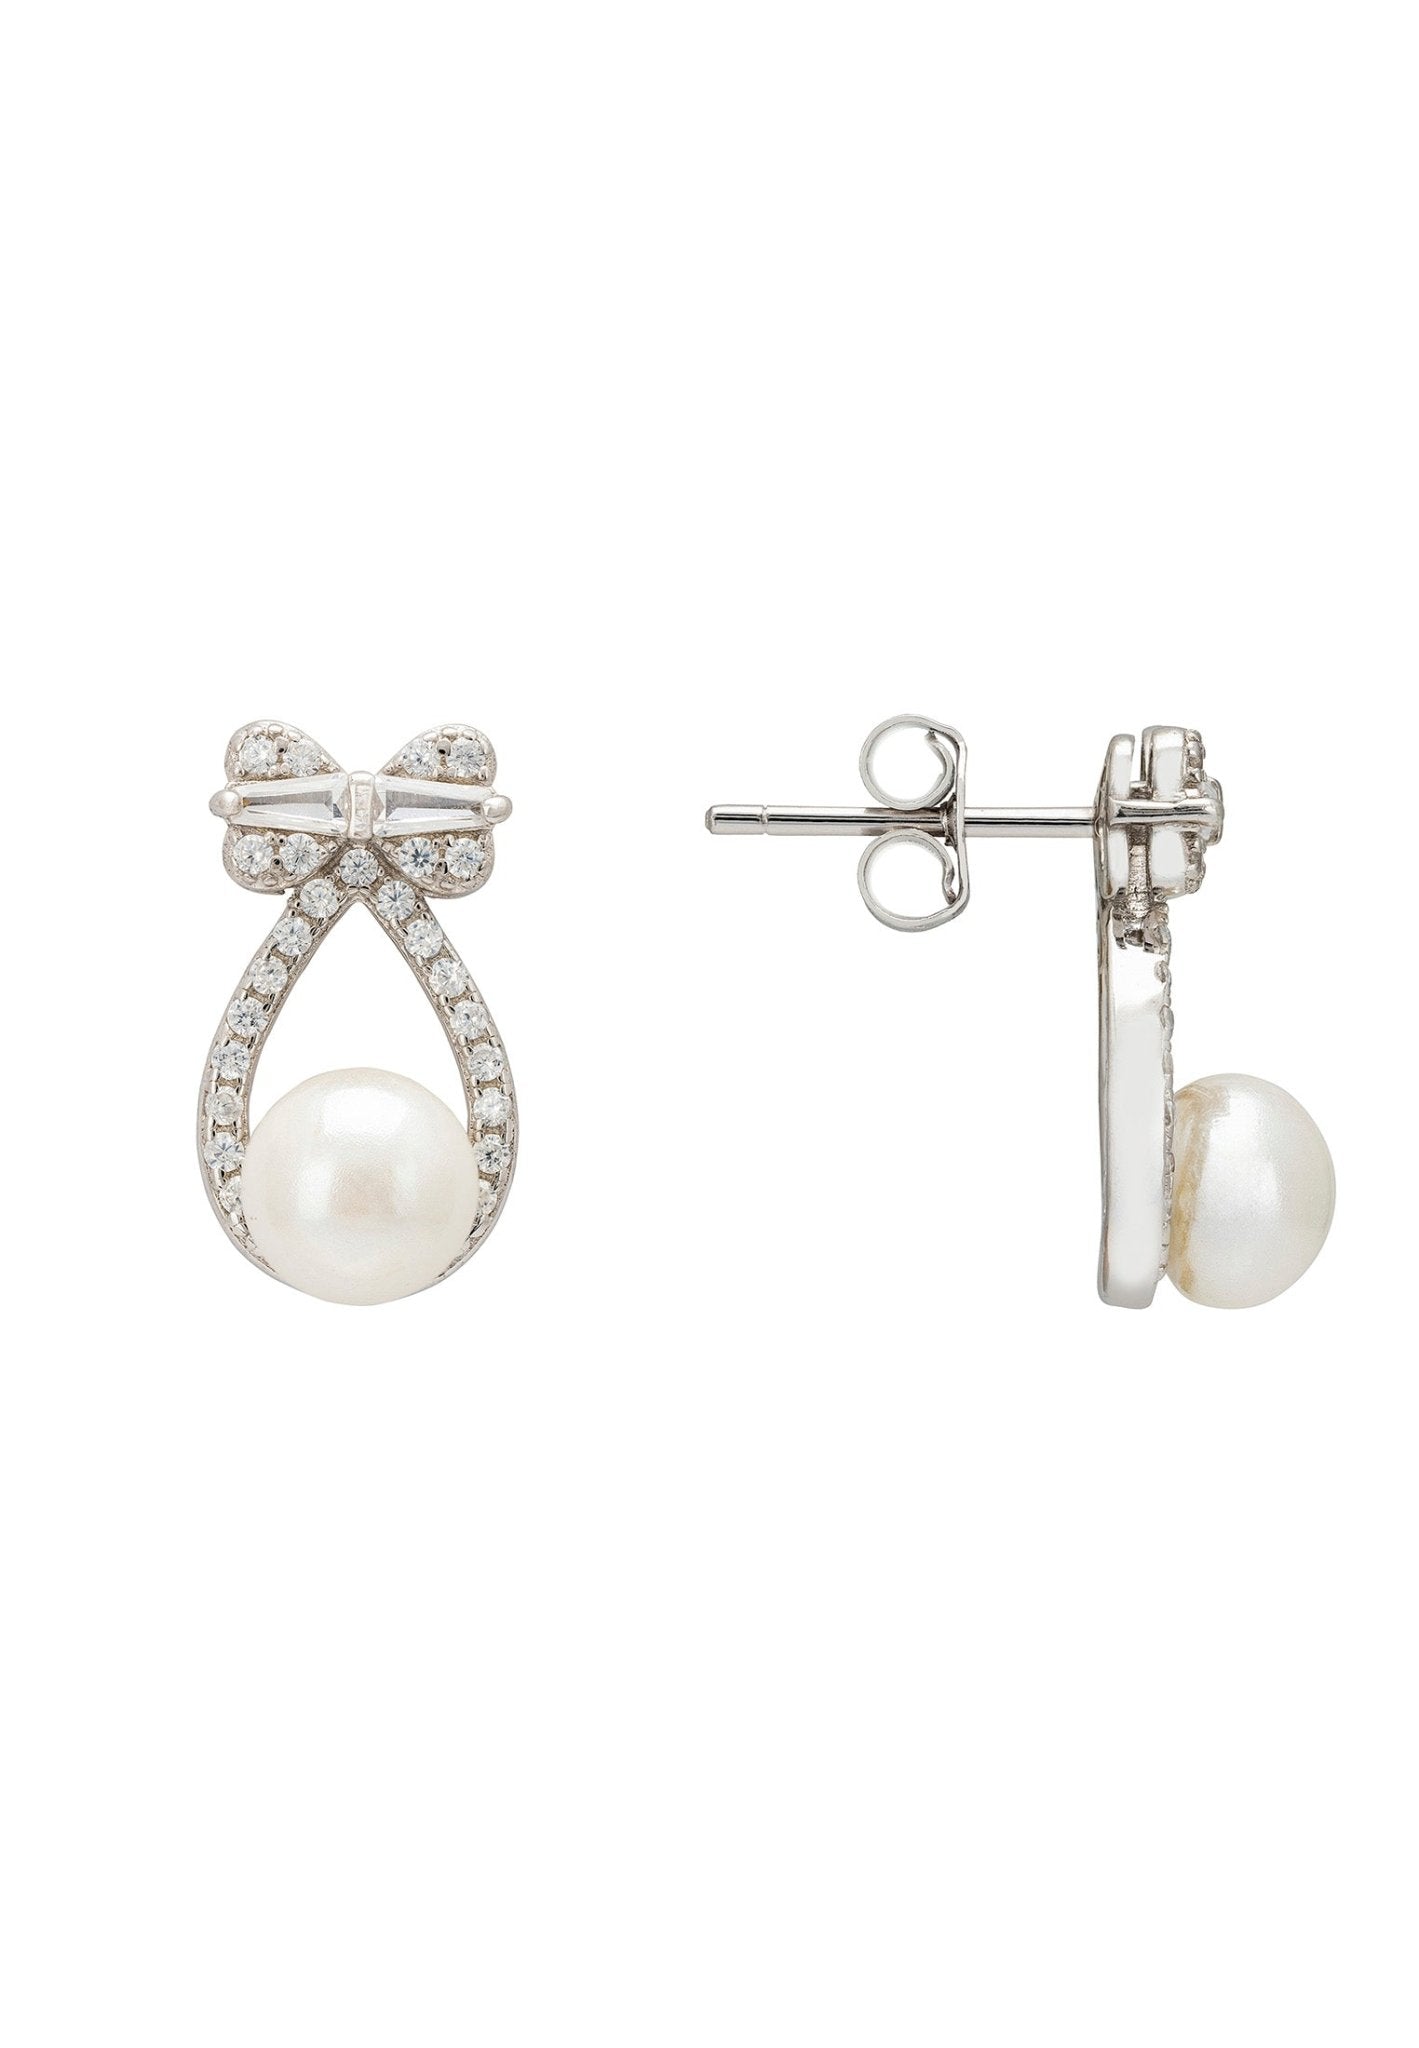 Bows And Pearls Earrings Silver - LATELITA Earrings